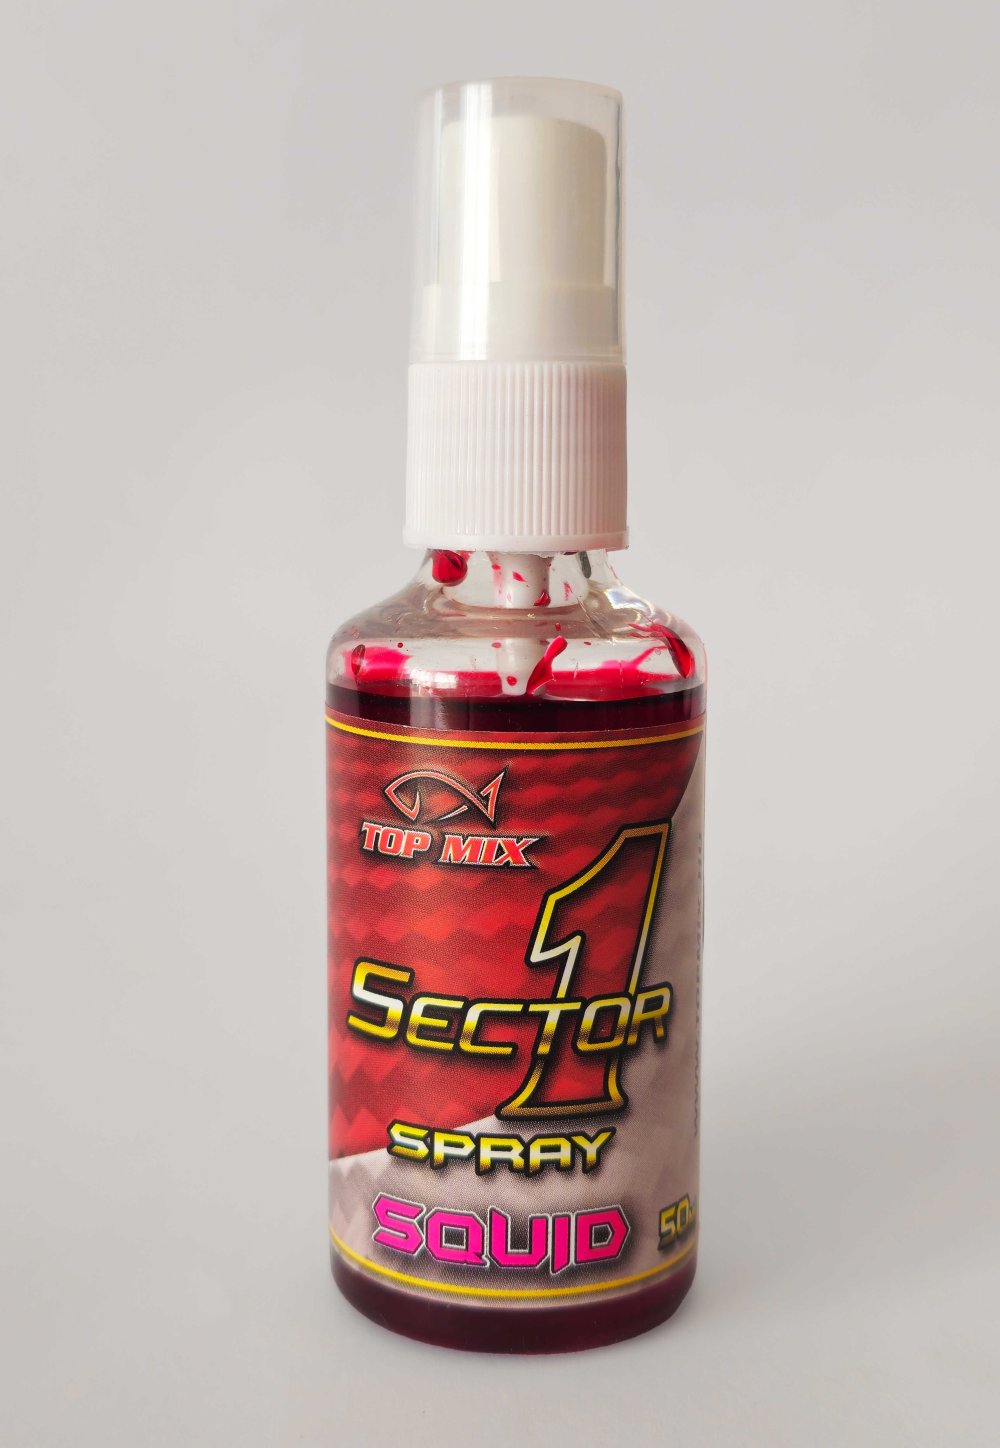 SNECI - Horgász webshop és horgászbolt - TOP MIX Sector 1 Method spray - Squid